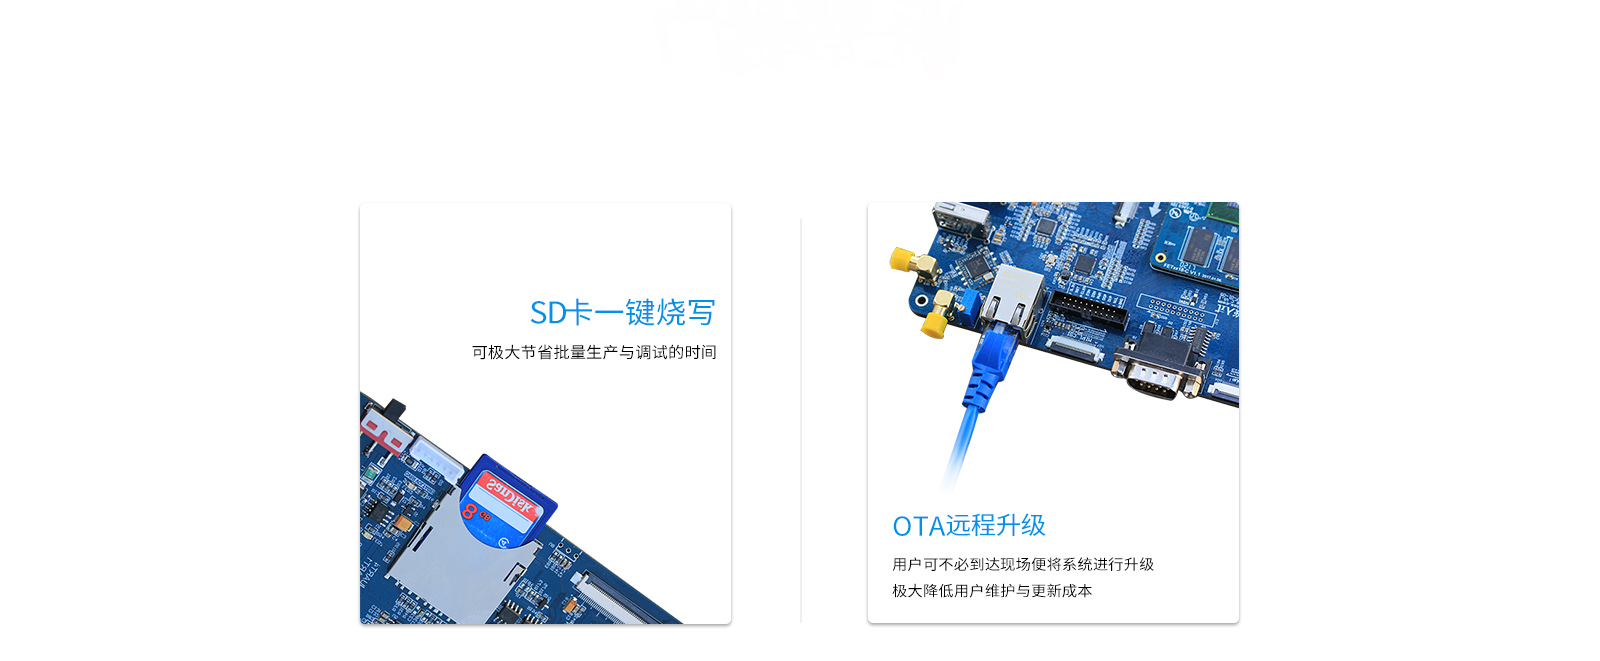 S5P6818SD卡一键烧写，OTA远程升级